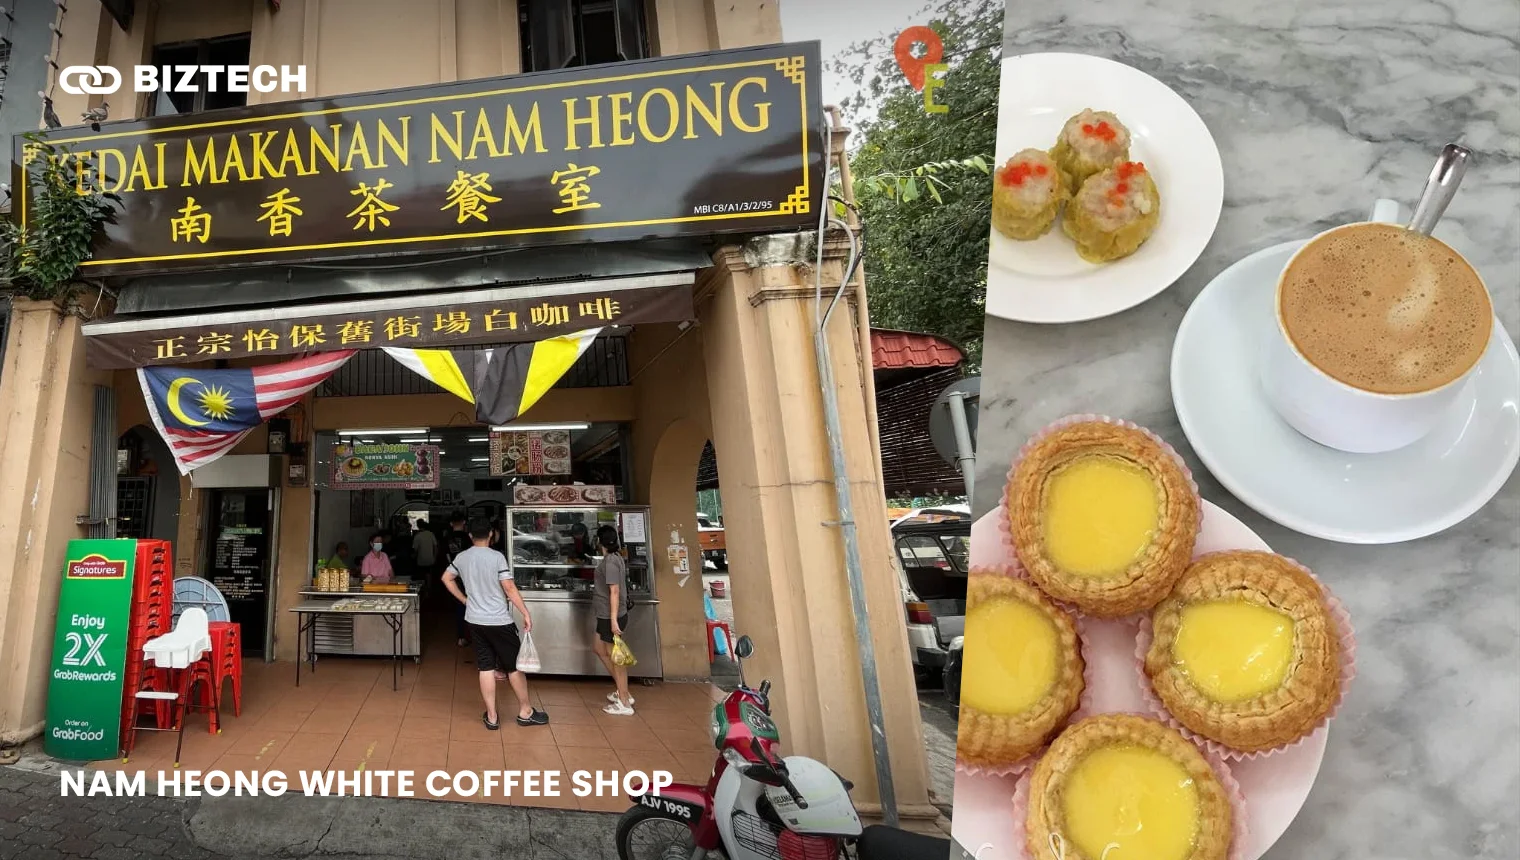 Nam Heong White Coffee Shop